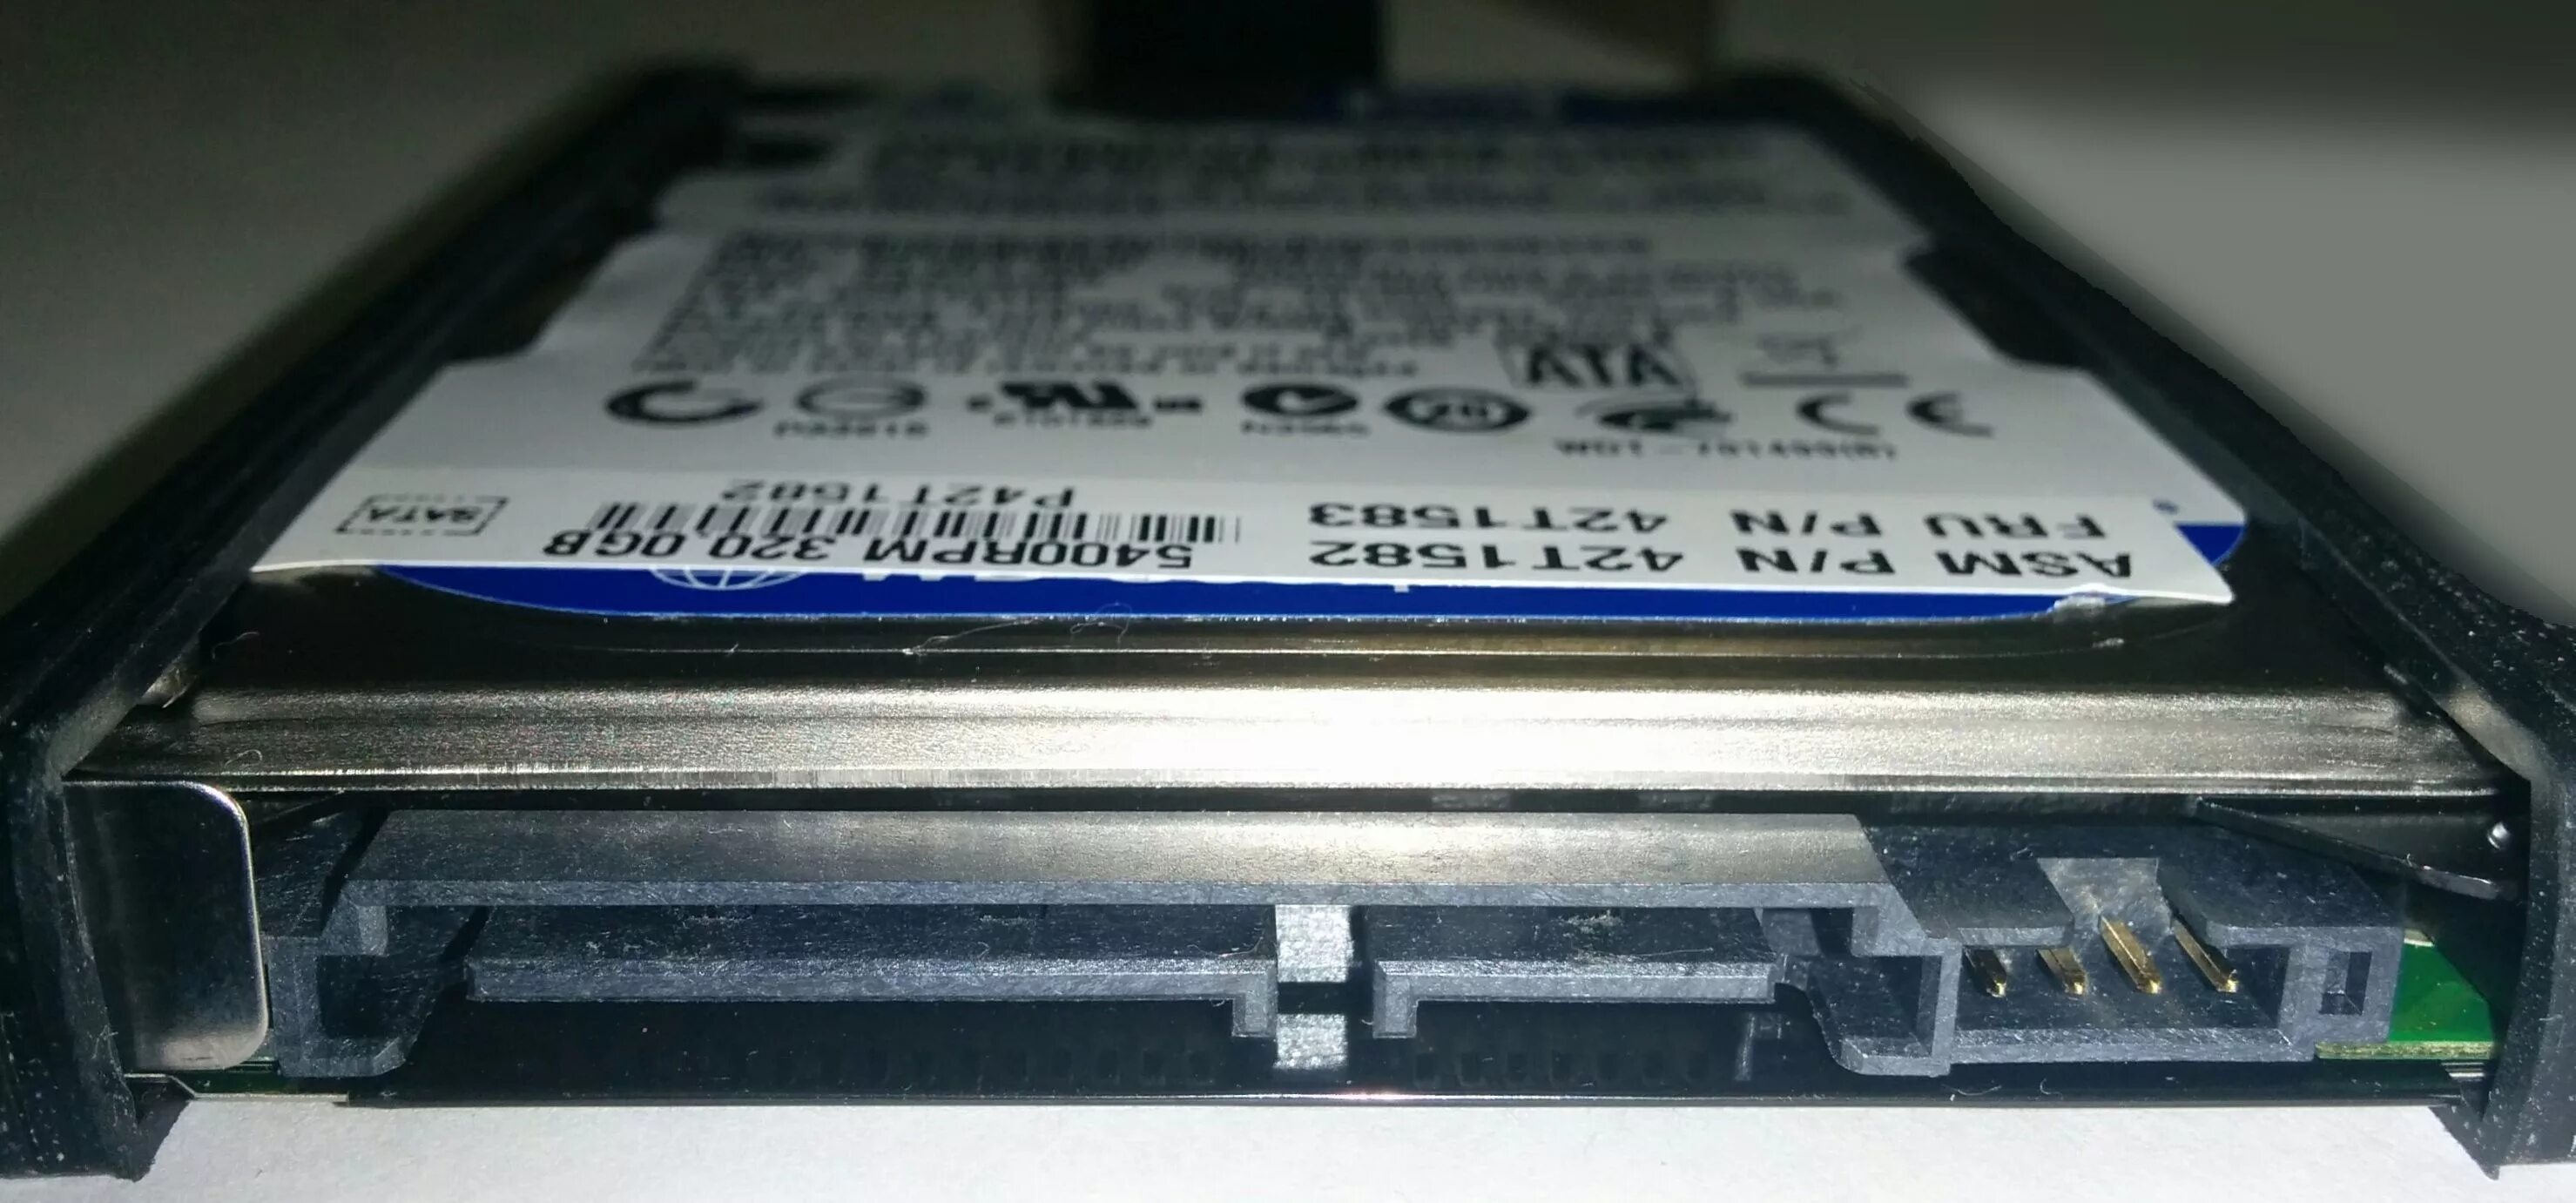 HDD SATA 3 разъем. HDD ноутбука разъем SATA 3. Разъемы жесткого диска SATA 3.5. Разъем ыфещ на жёстком диске.